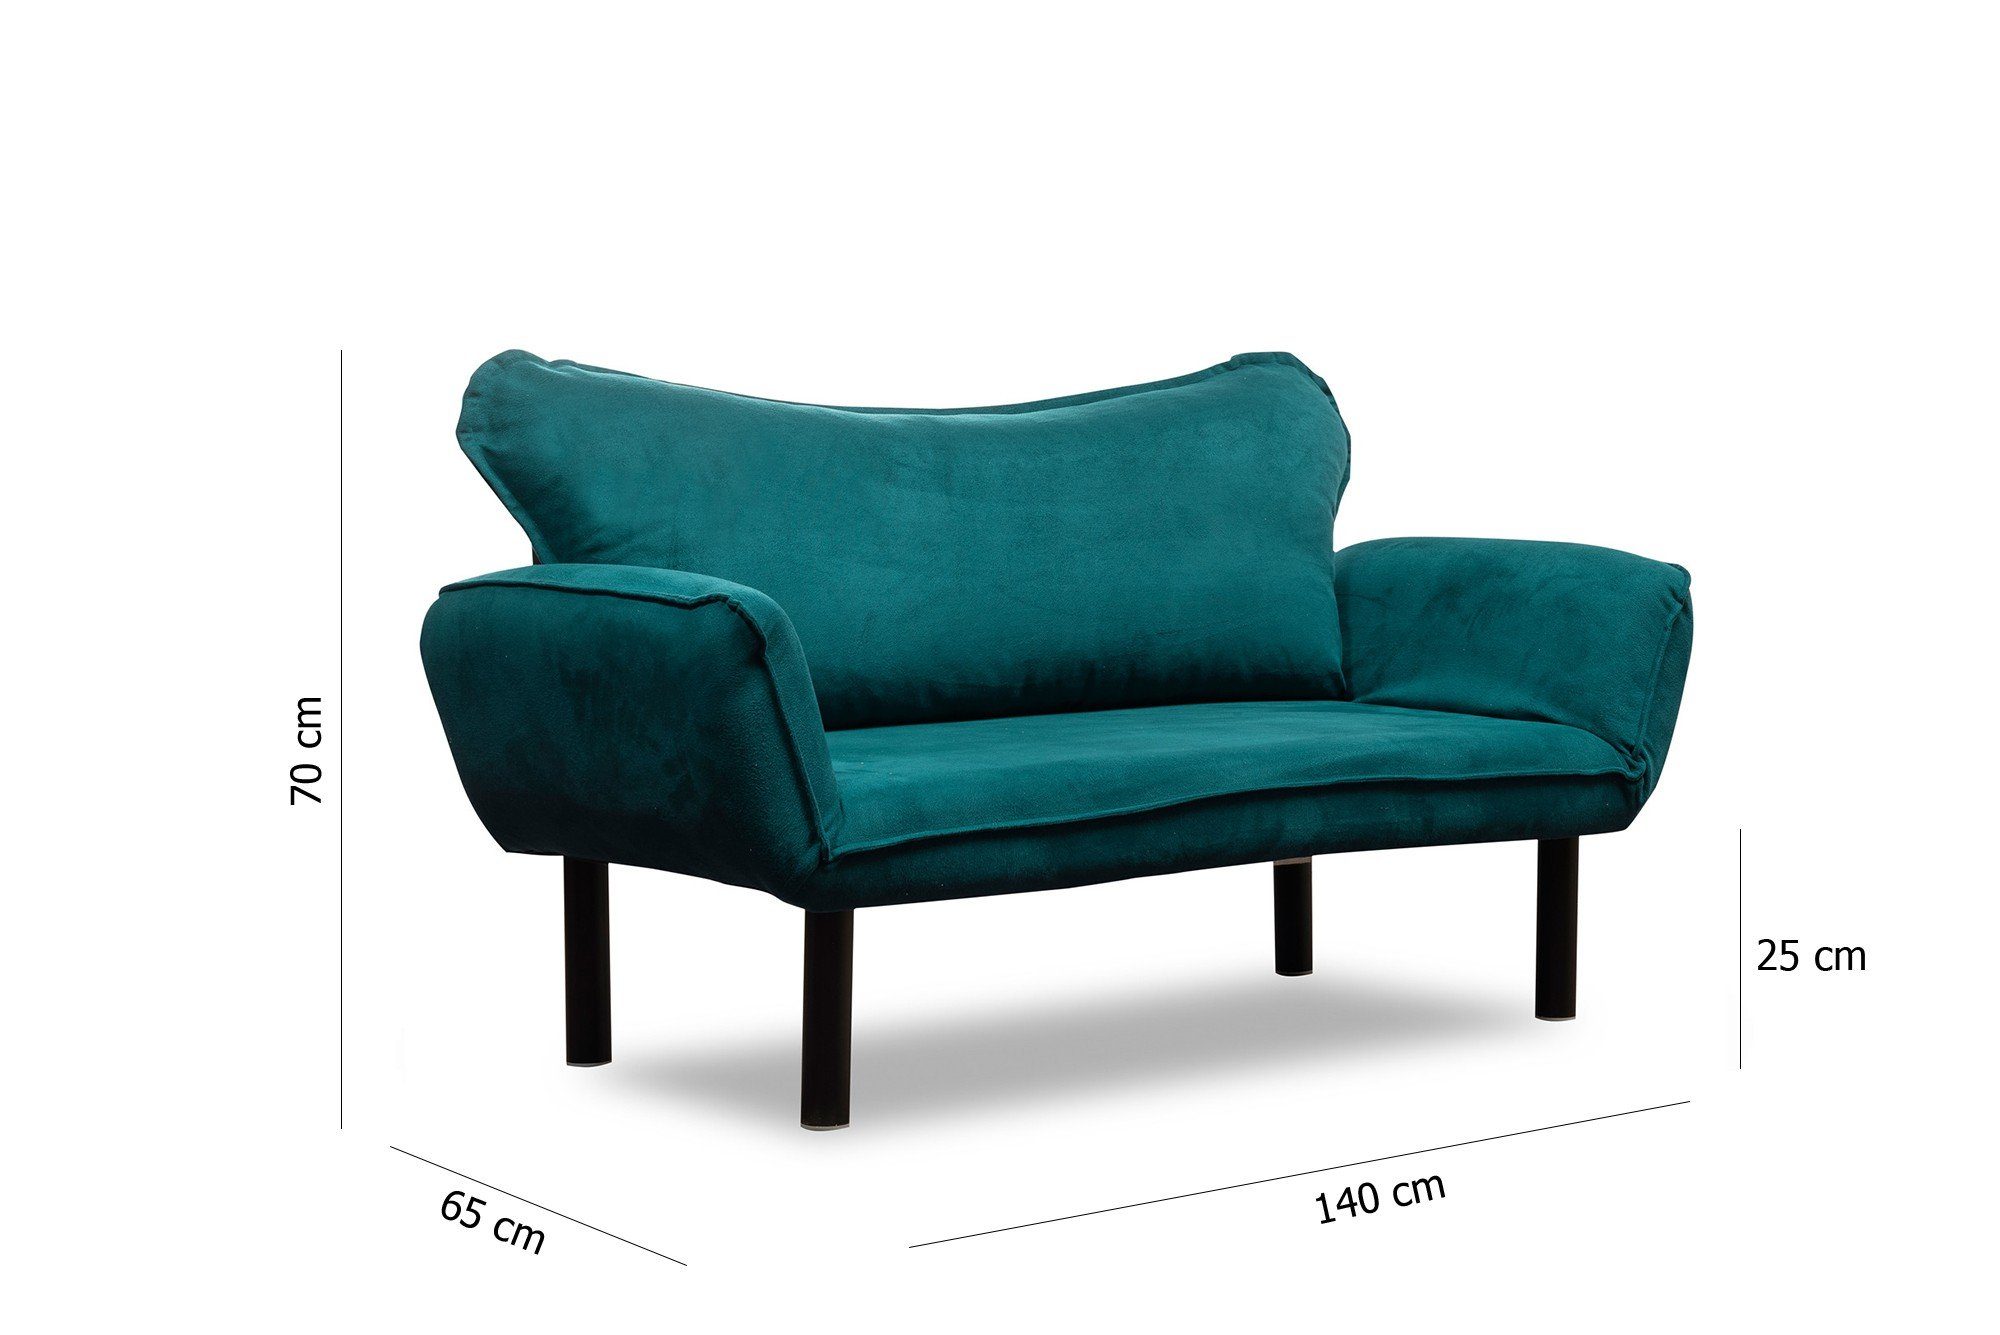 Skye FTN1230 Decor Sofa